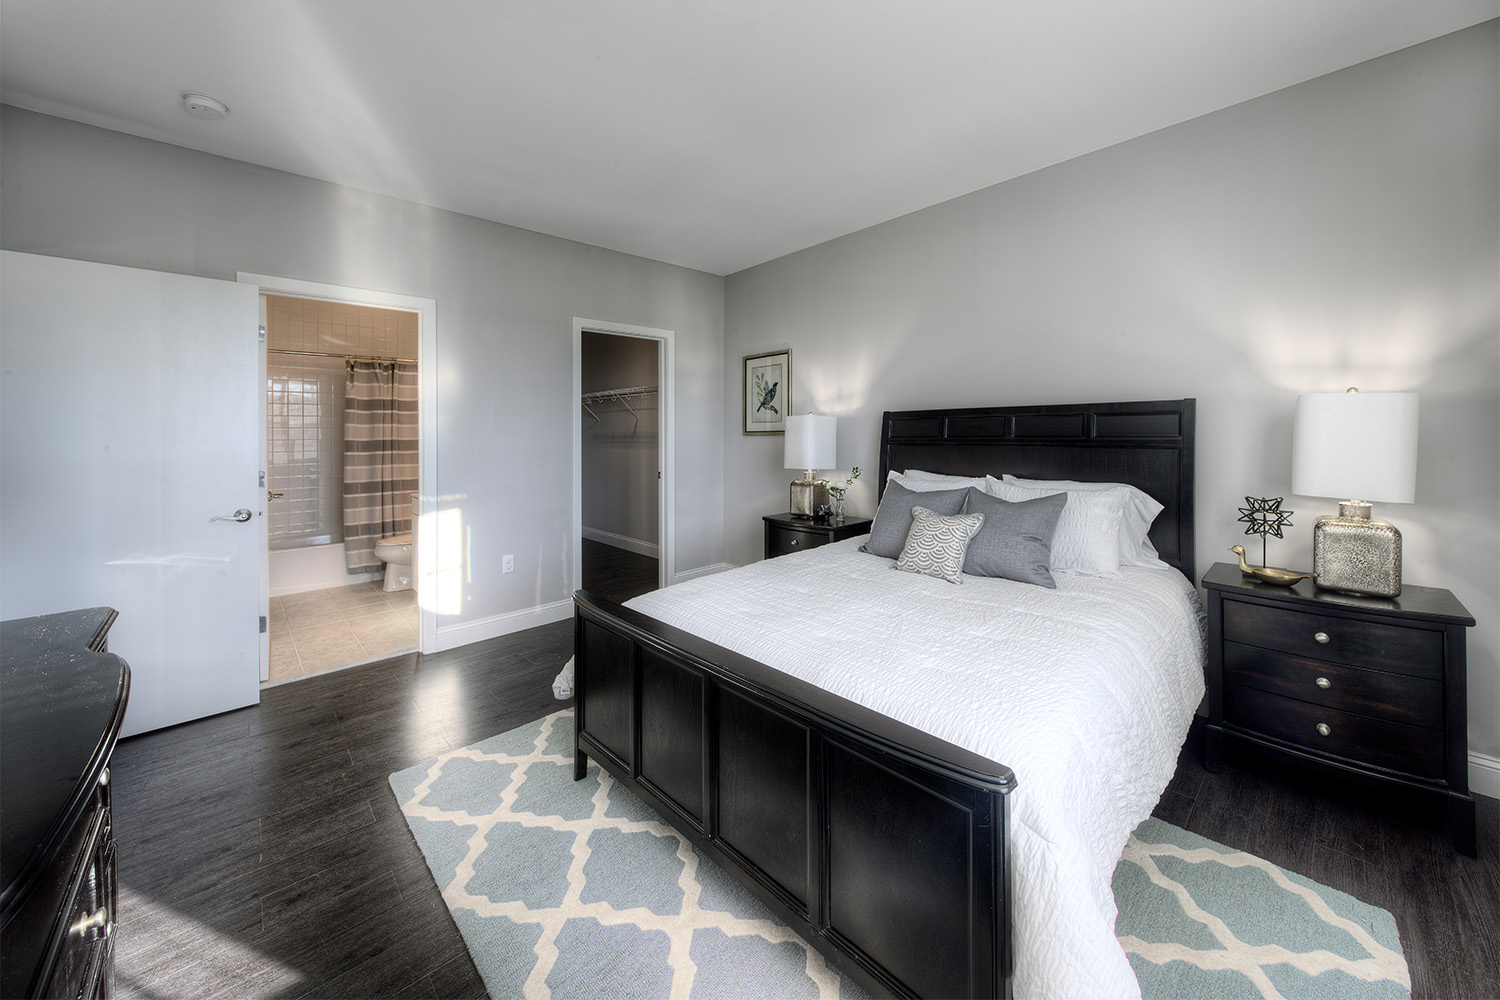 Bedroom with bed in blackwood bedframe, soft rug, and 2 interior doors